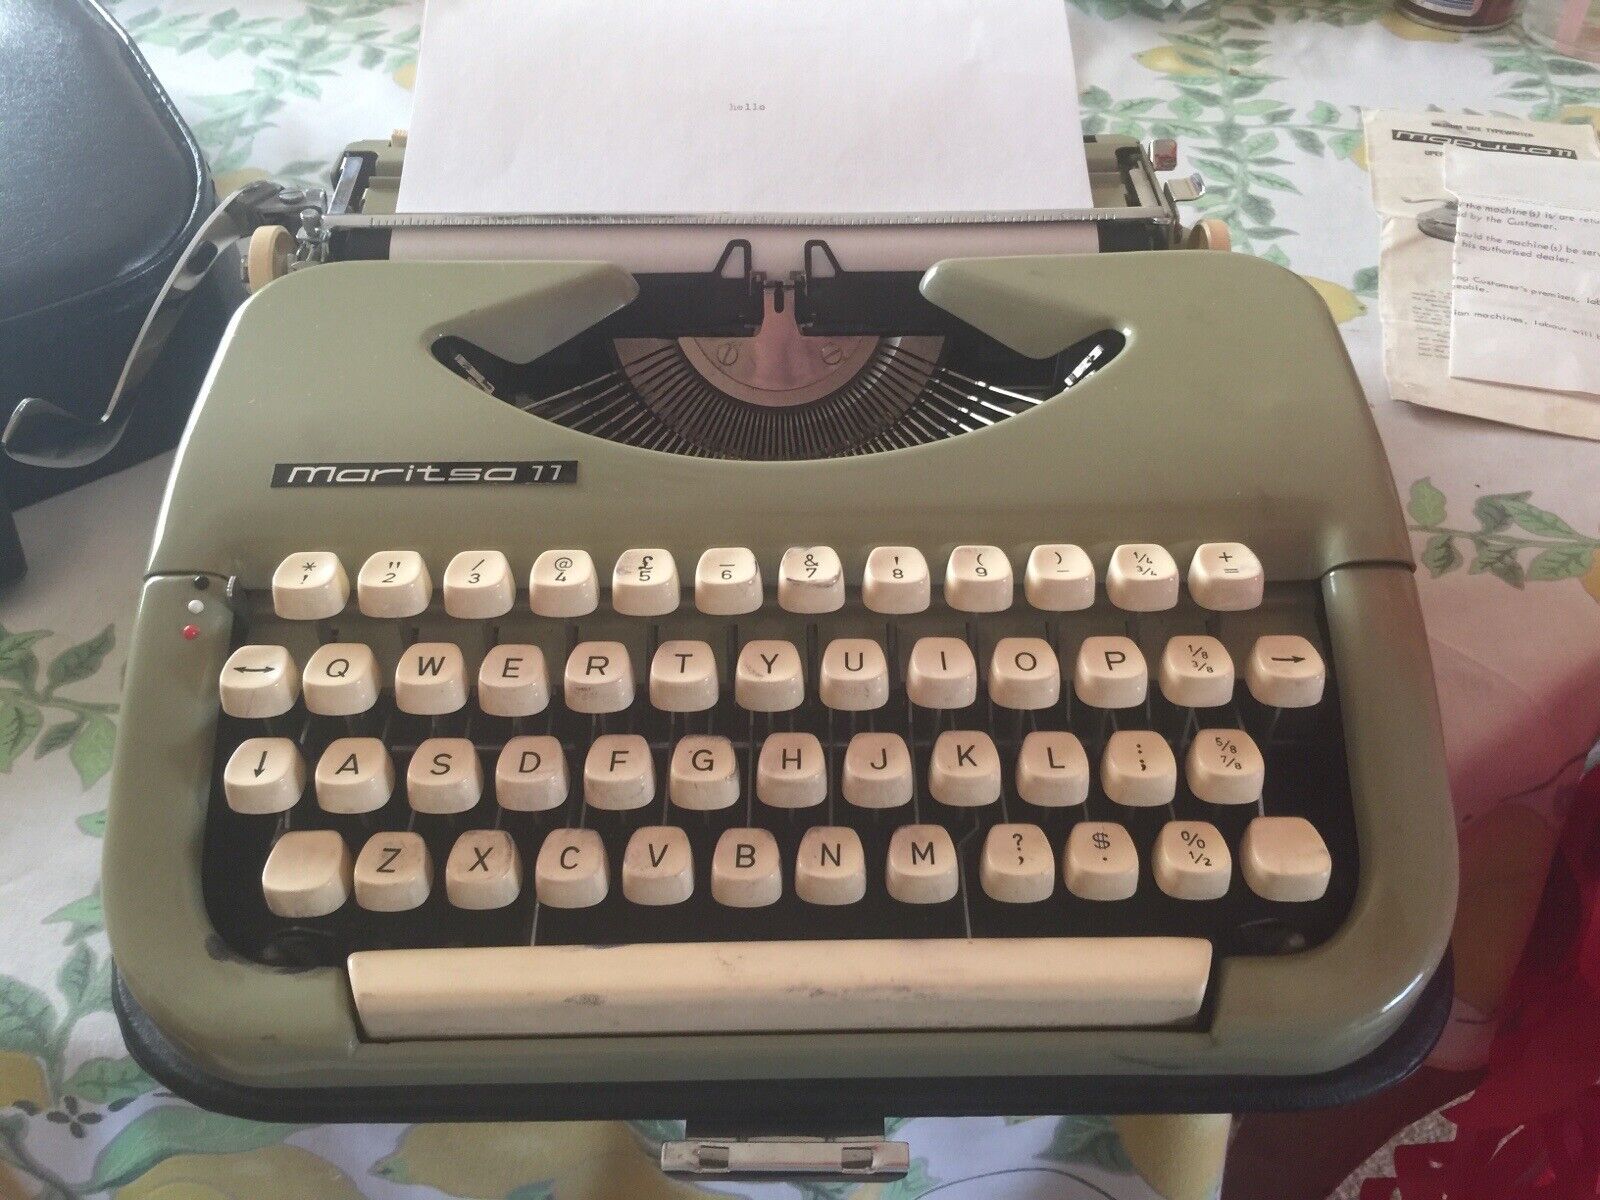 Maritsa 11 Typewriter, (1975) In Carry Case with Original Bill of Sale/Manual.